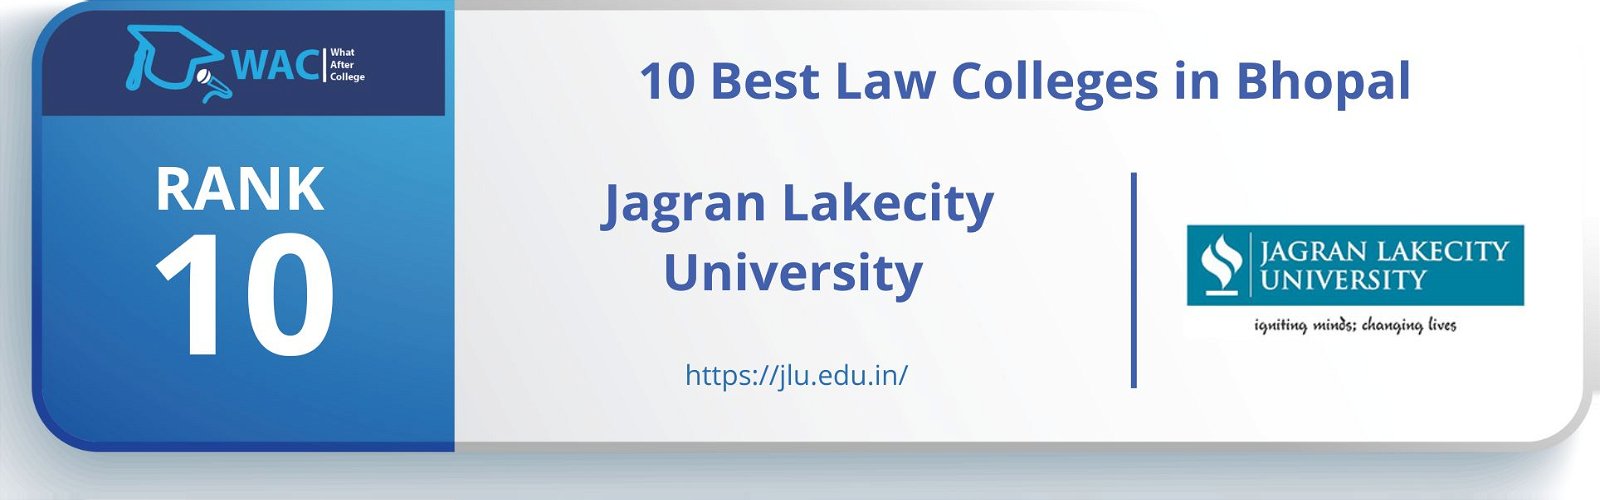 Jagran Lakecity University 